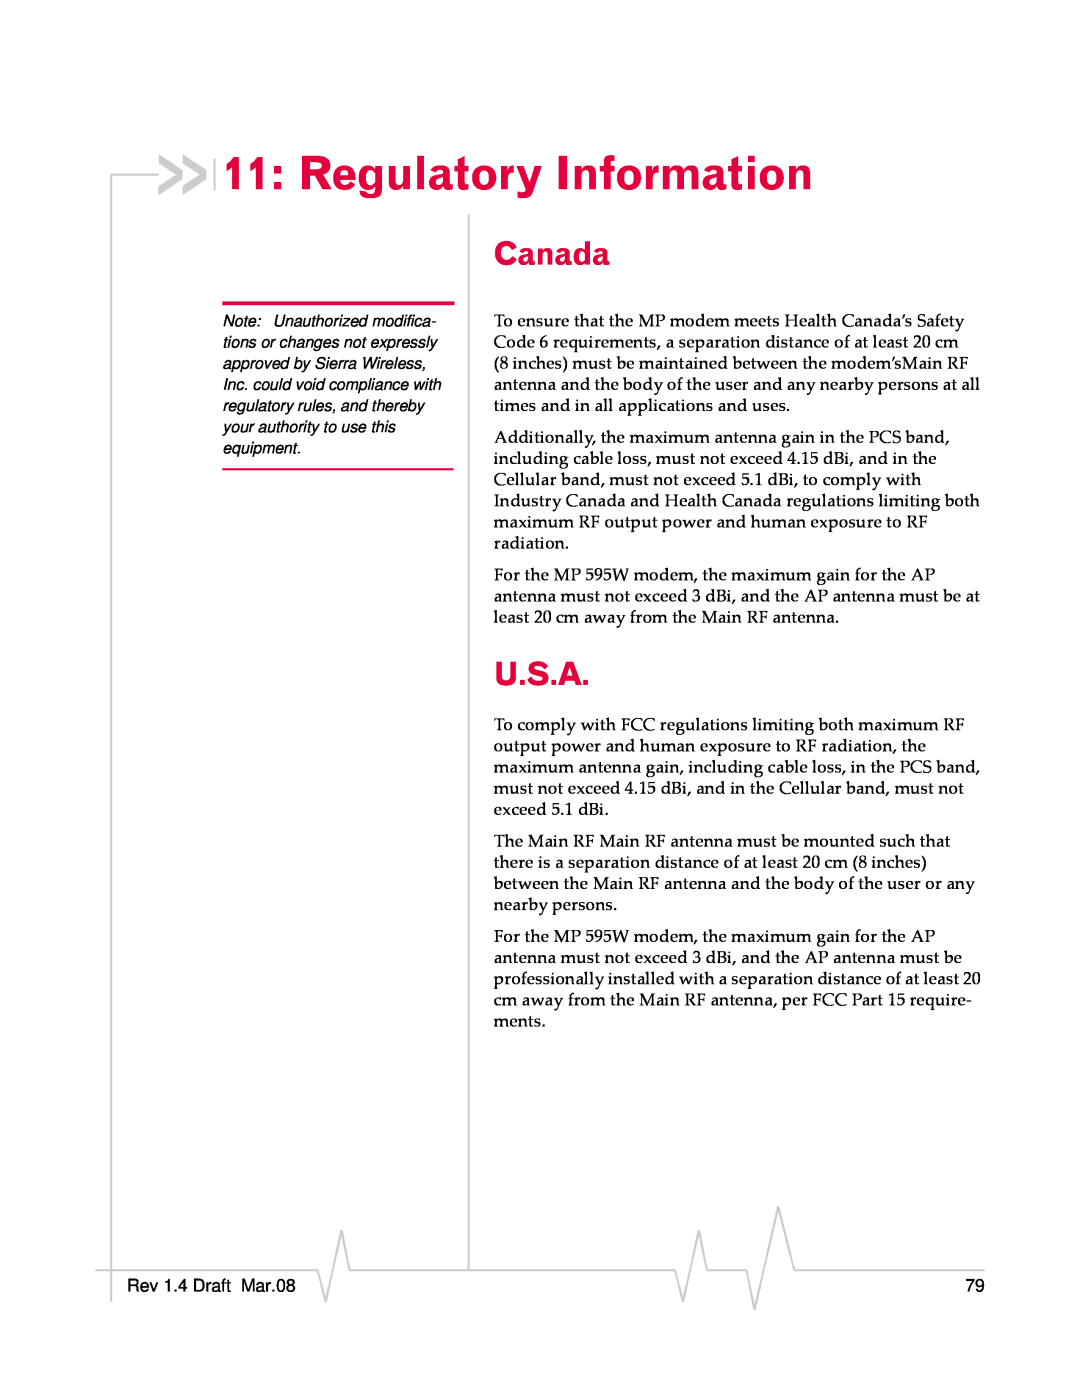 Sierra Wireless MP595W manual Regulatory Information, Canada, U.S.A 